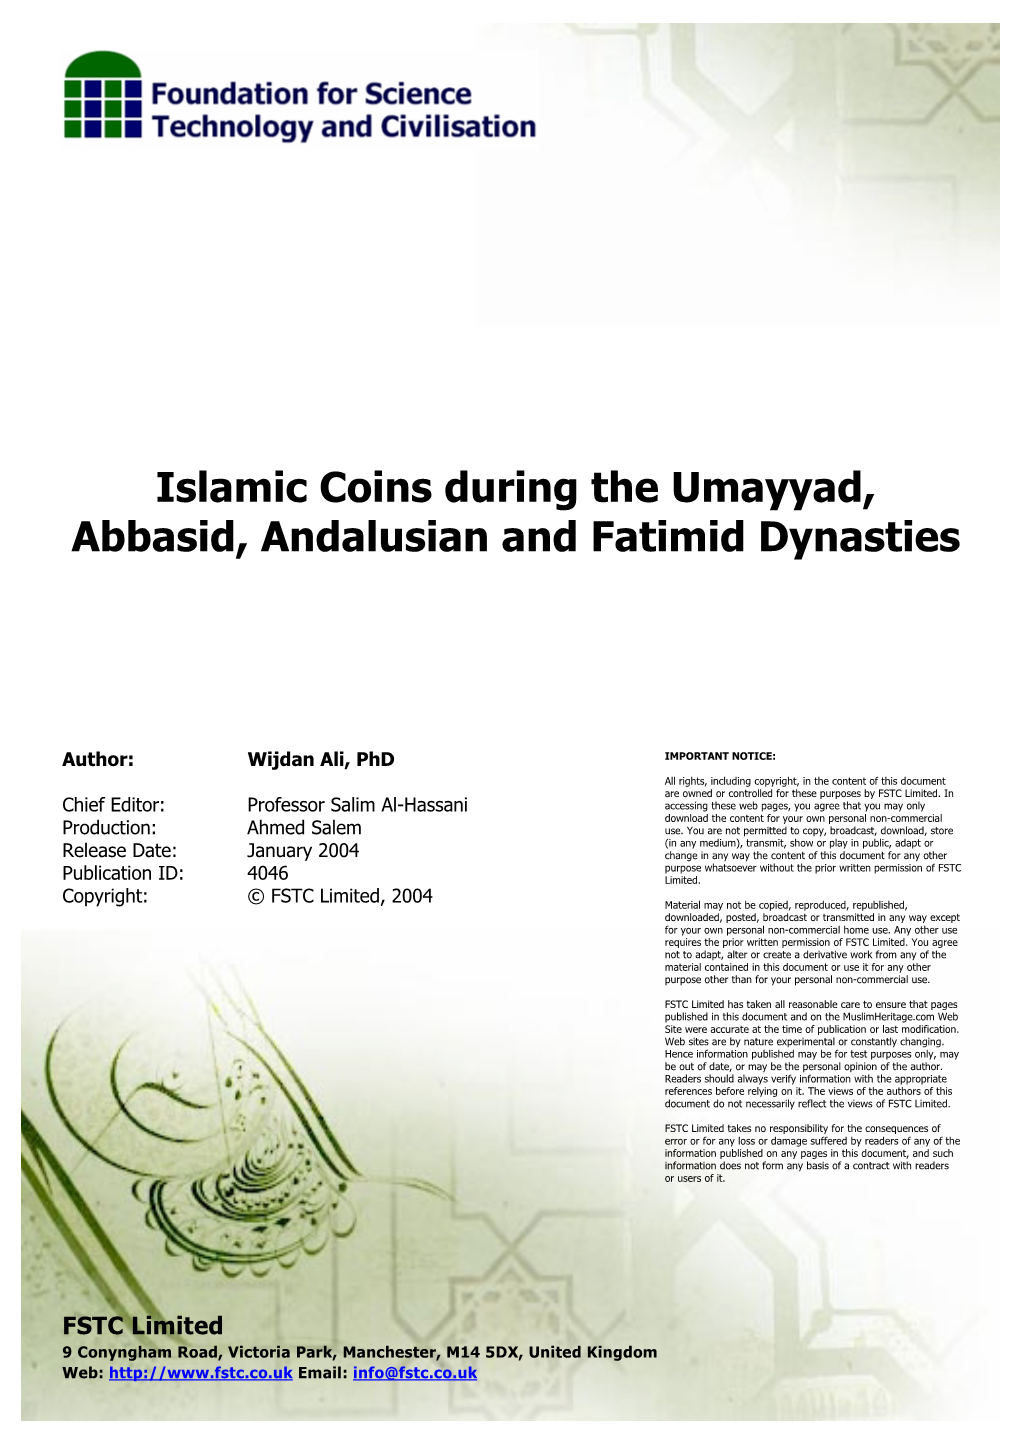 Islamic Coins During the Umayyad, Abbasid, Andalusian and Fatimid Dynasties